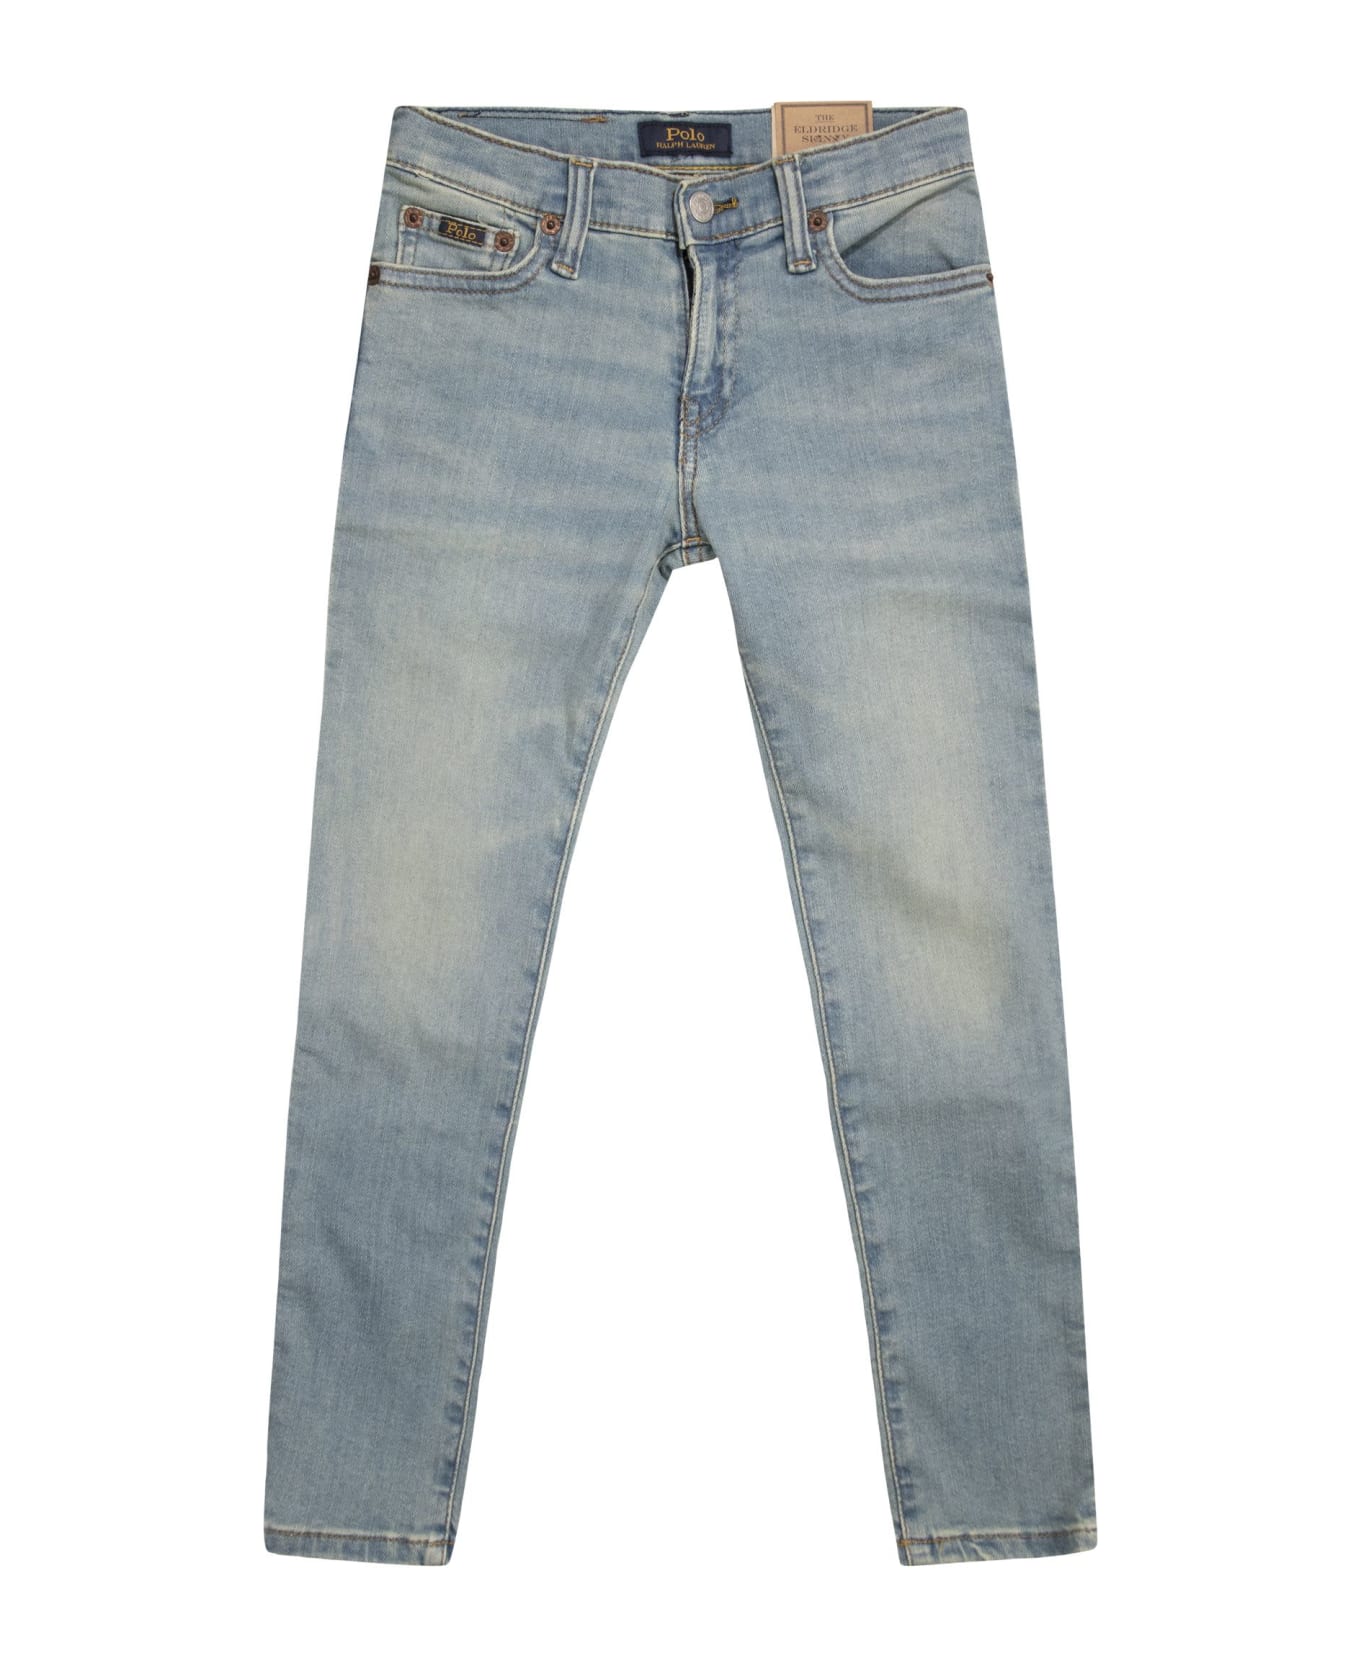 Polo Ralph Lauren Hartley Slim Stretch Jeans - Light Denim